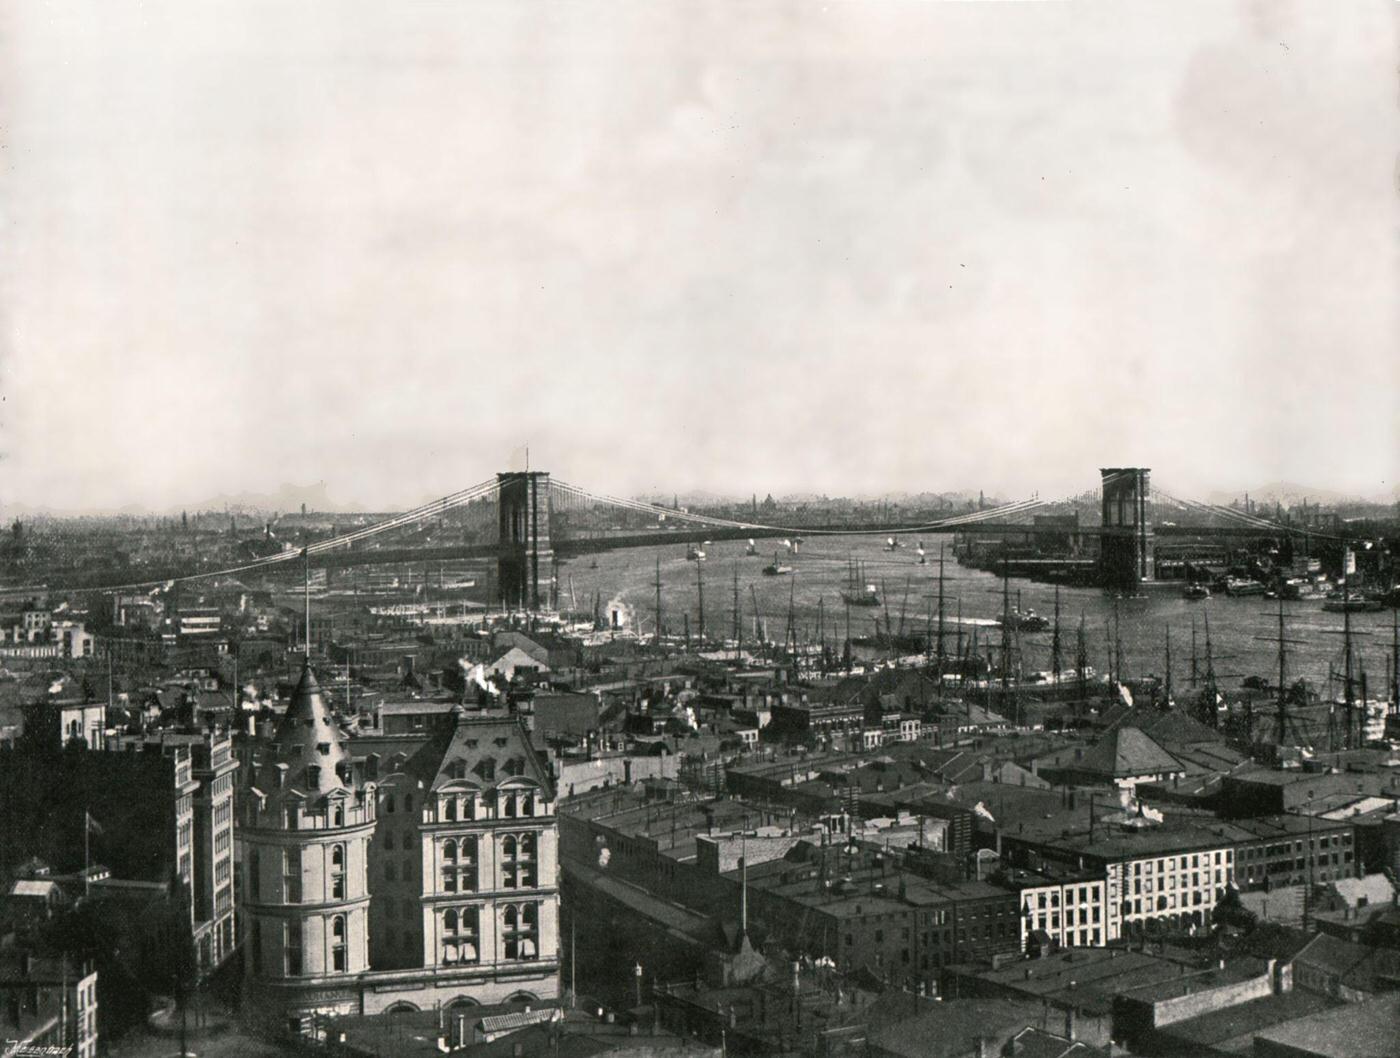 General View Showing The Brooklyn Bridge, New York City, 1895